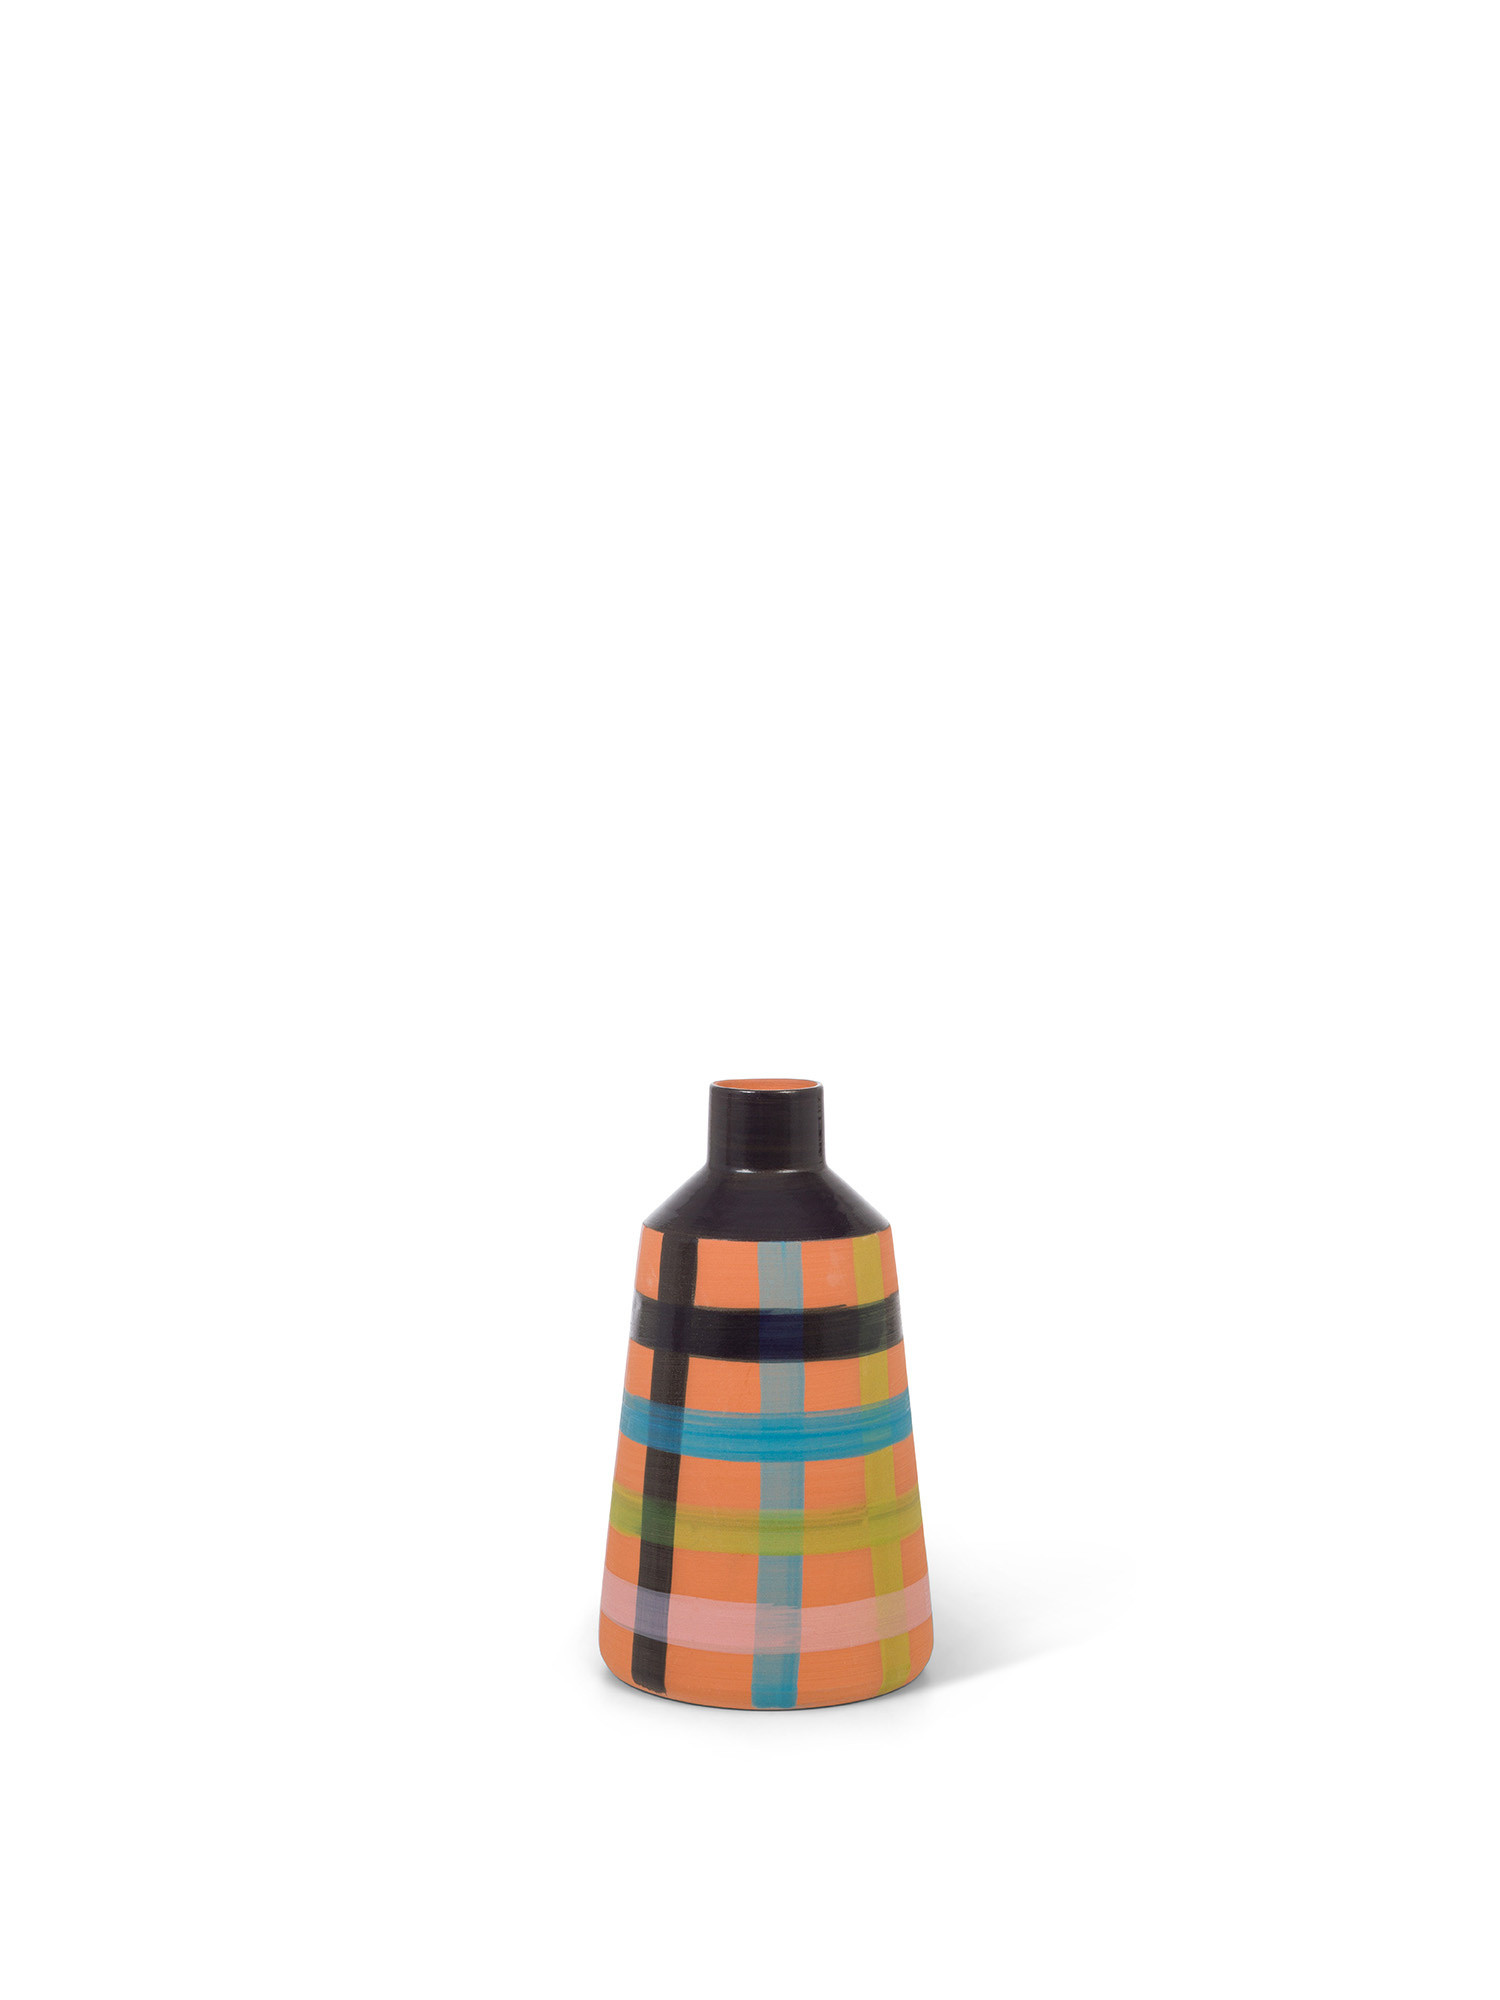 Ceramic check vase, Multicolor, large image number 0